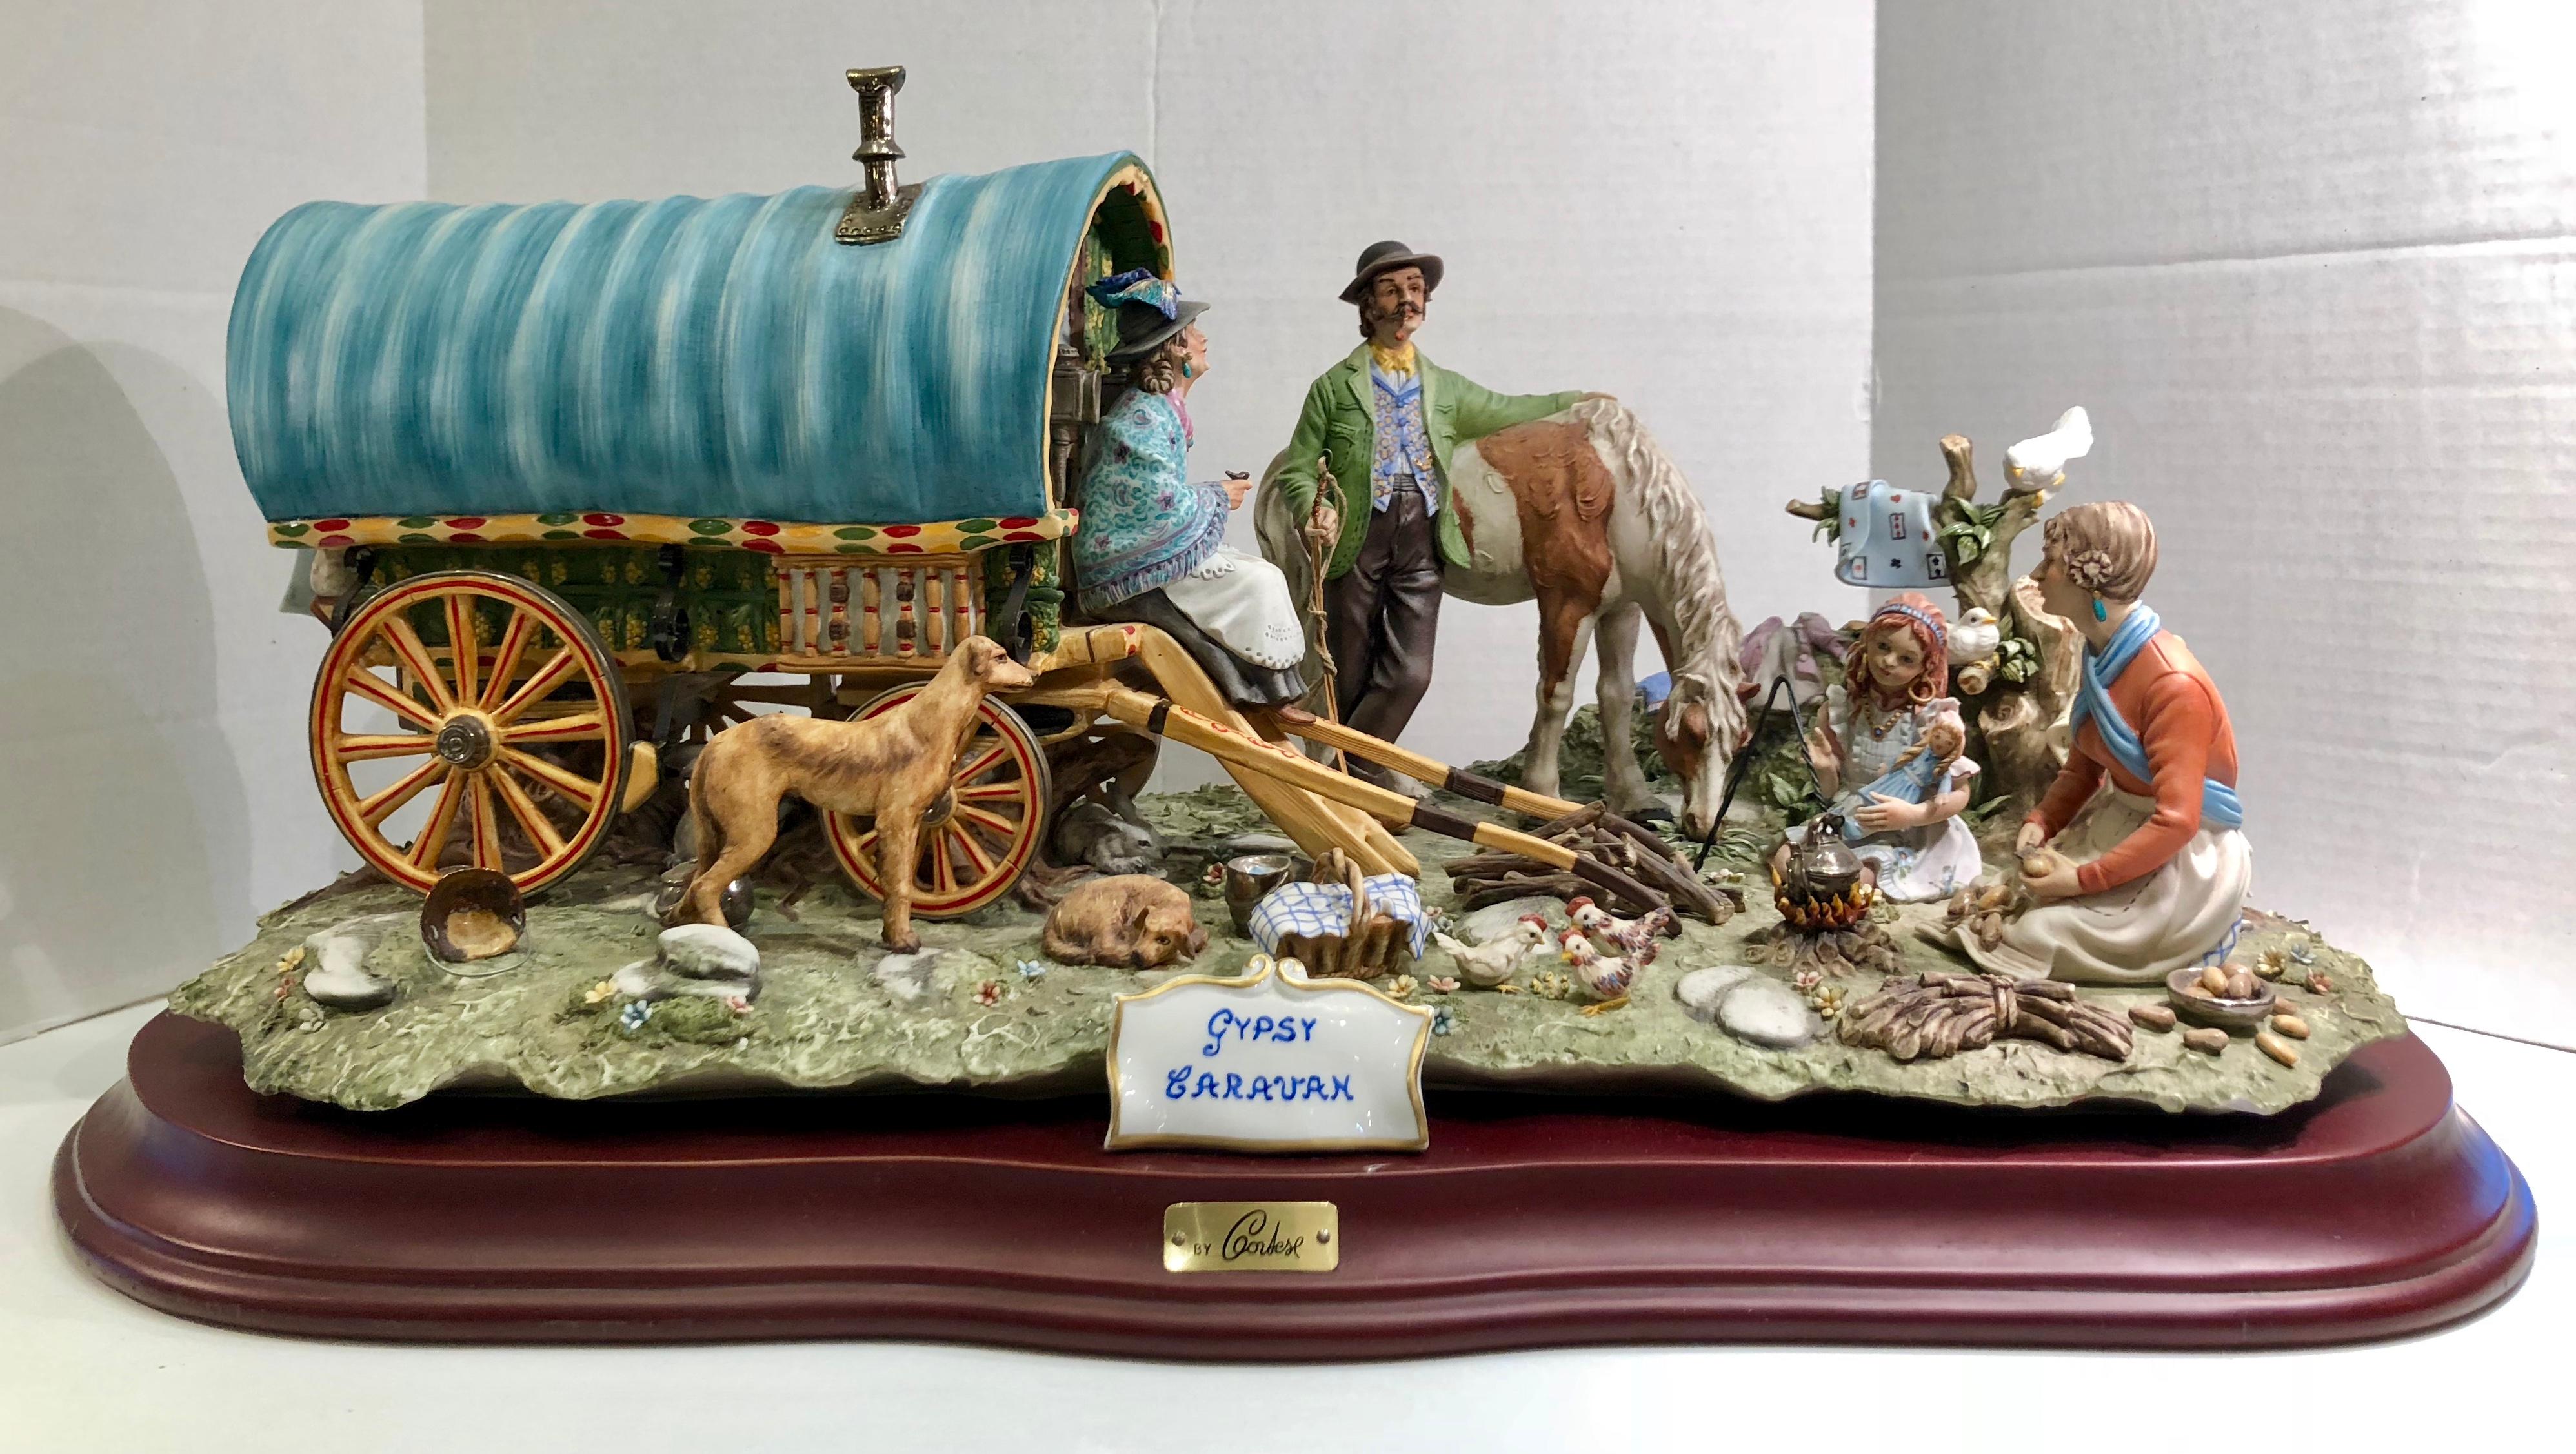 Fired Finest Quality Capodimonte Gypsy Caravan Italian Porcelain Scene by Cortese